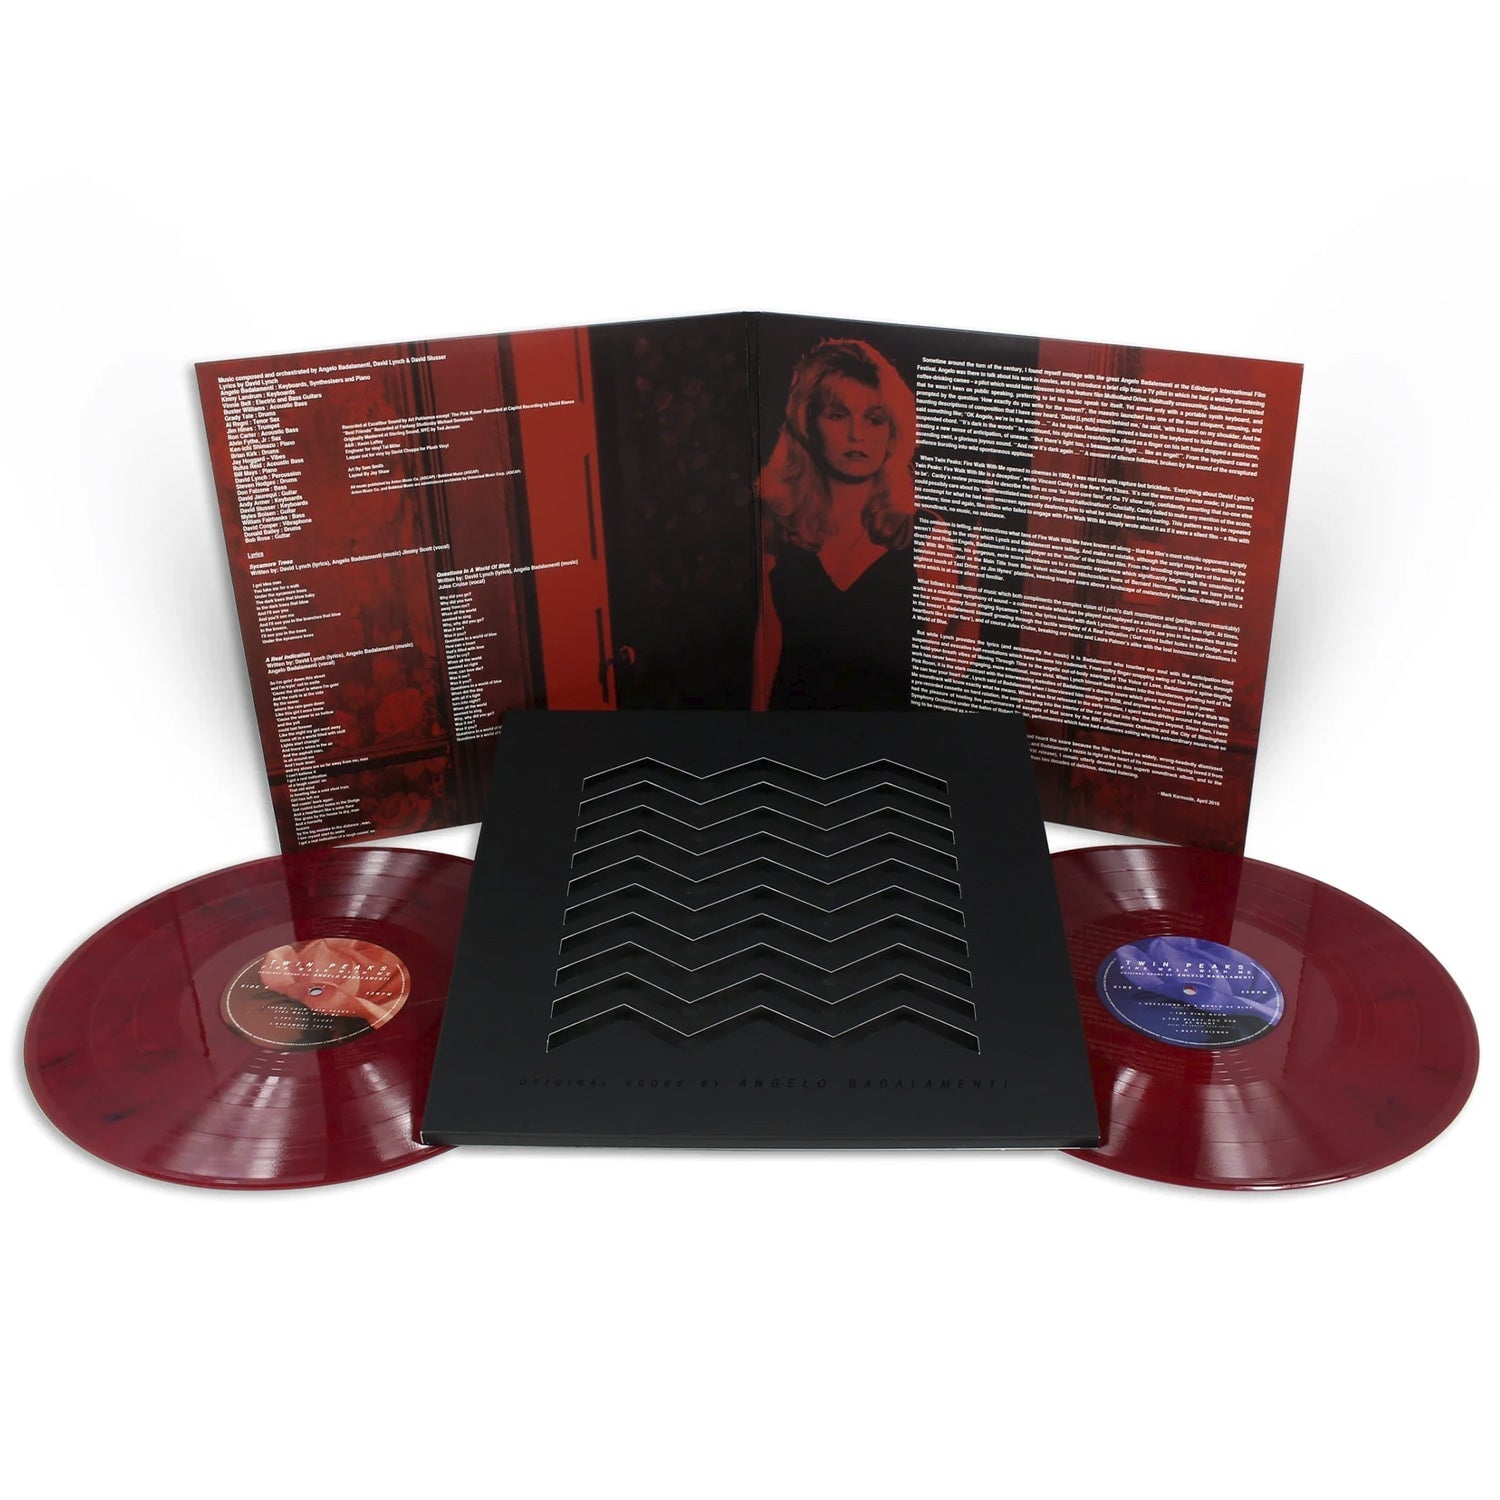 Twin Peaks: Fire Walk With Me (Original Motion Picture Soundtrack) (Cherry Pie Vinyl 2 LP)